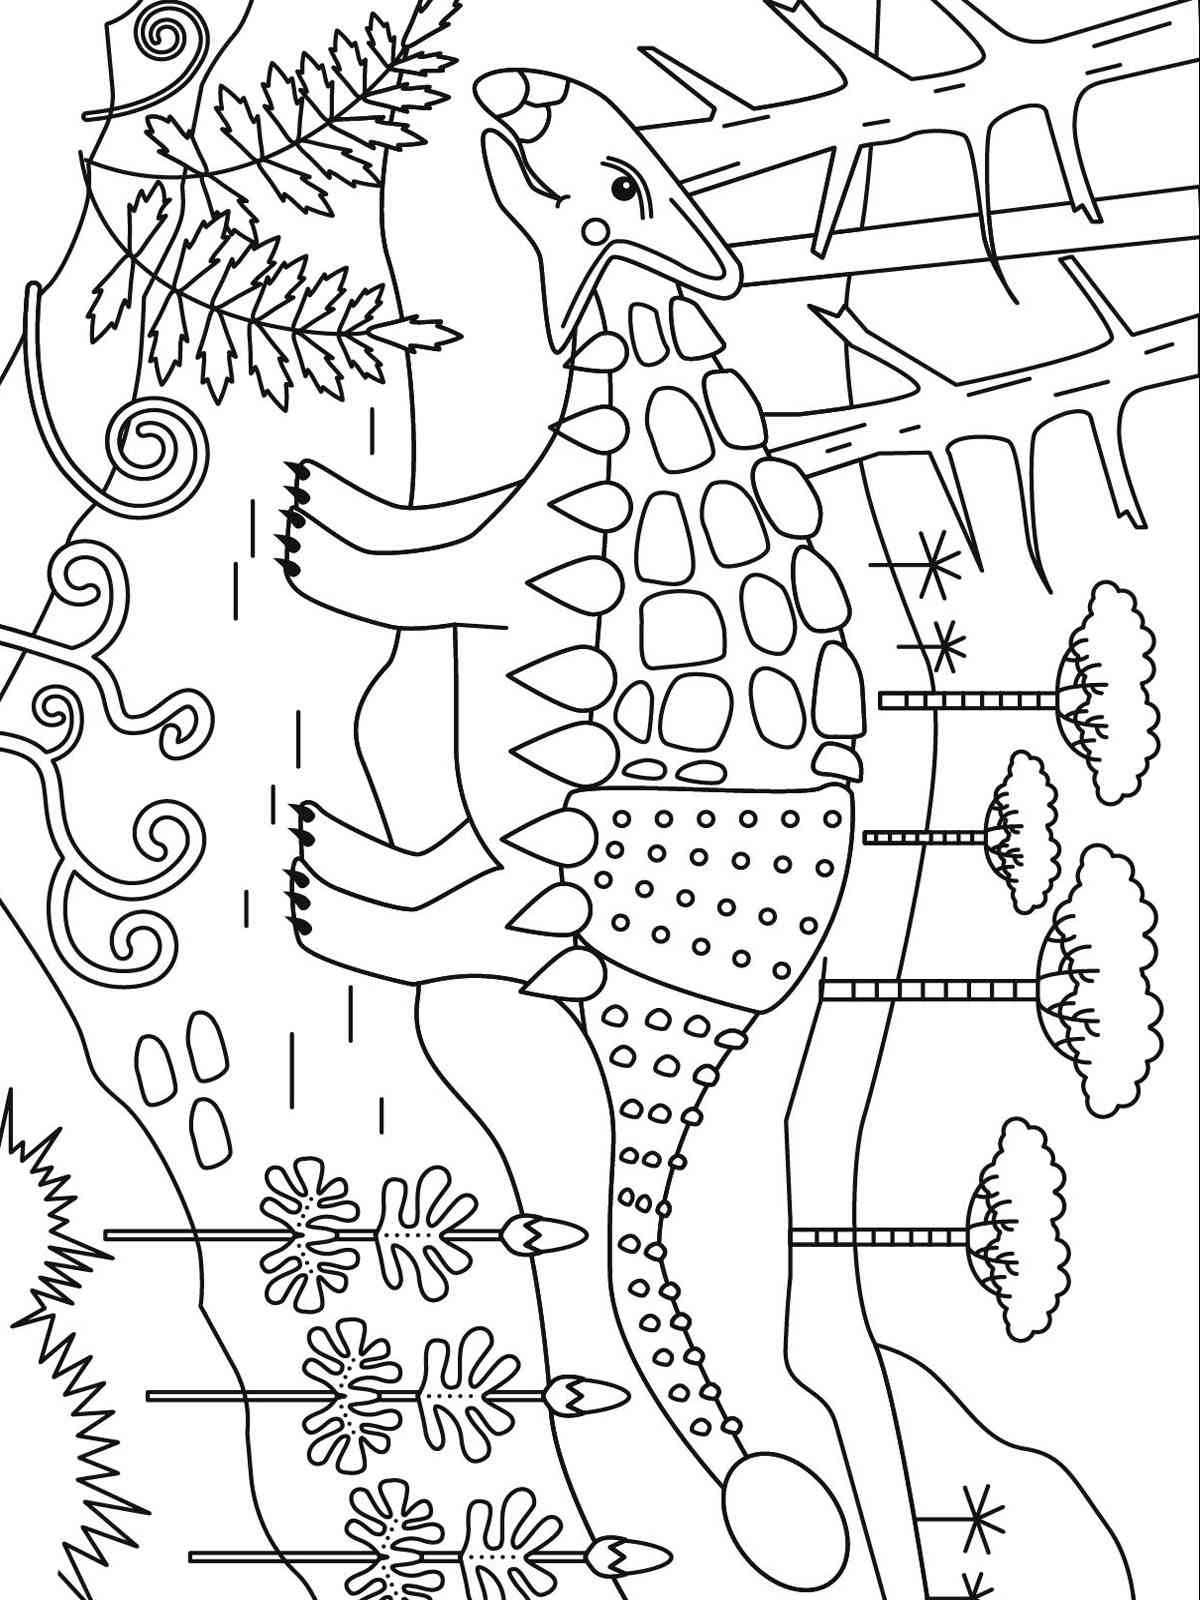 Wild Ankylosaurus coloring page